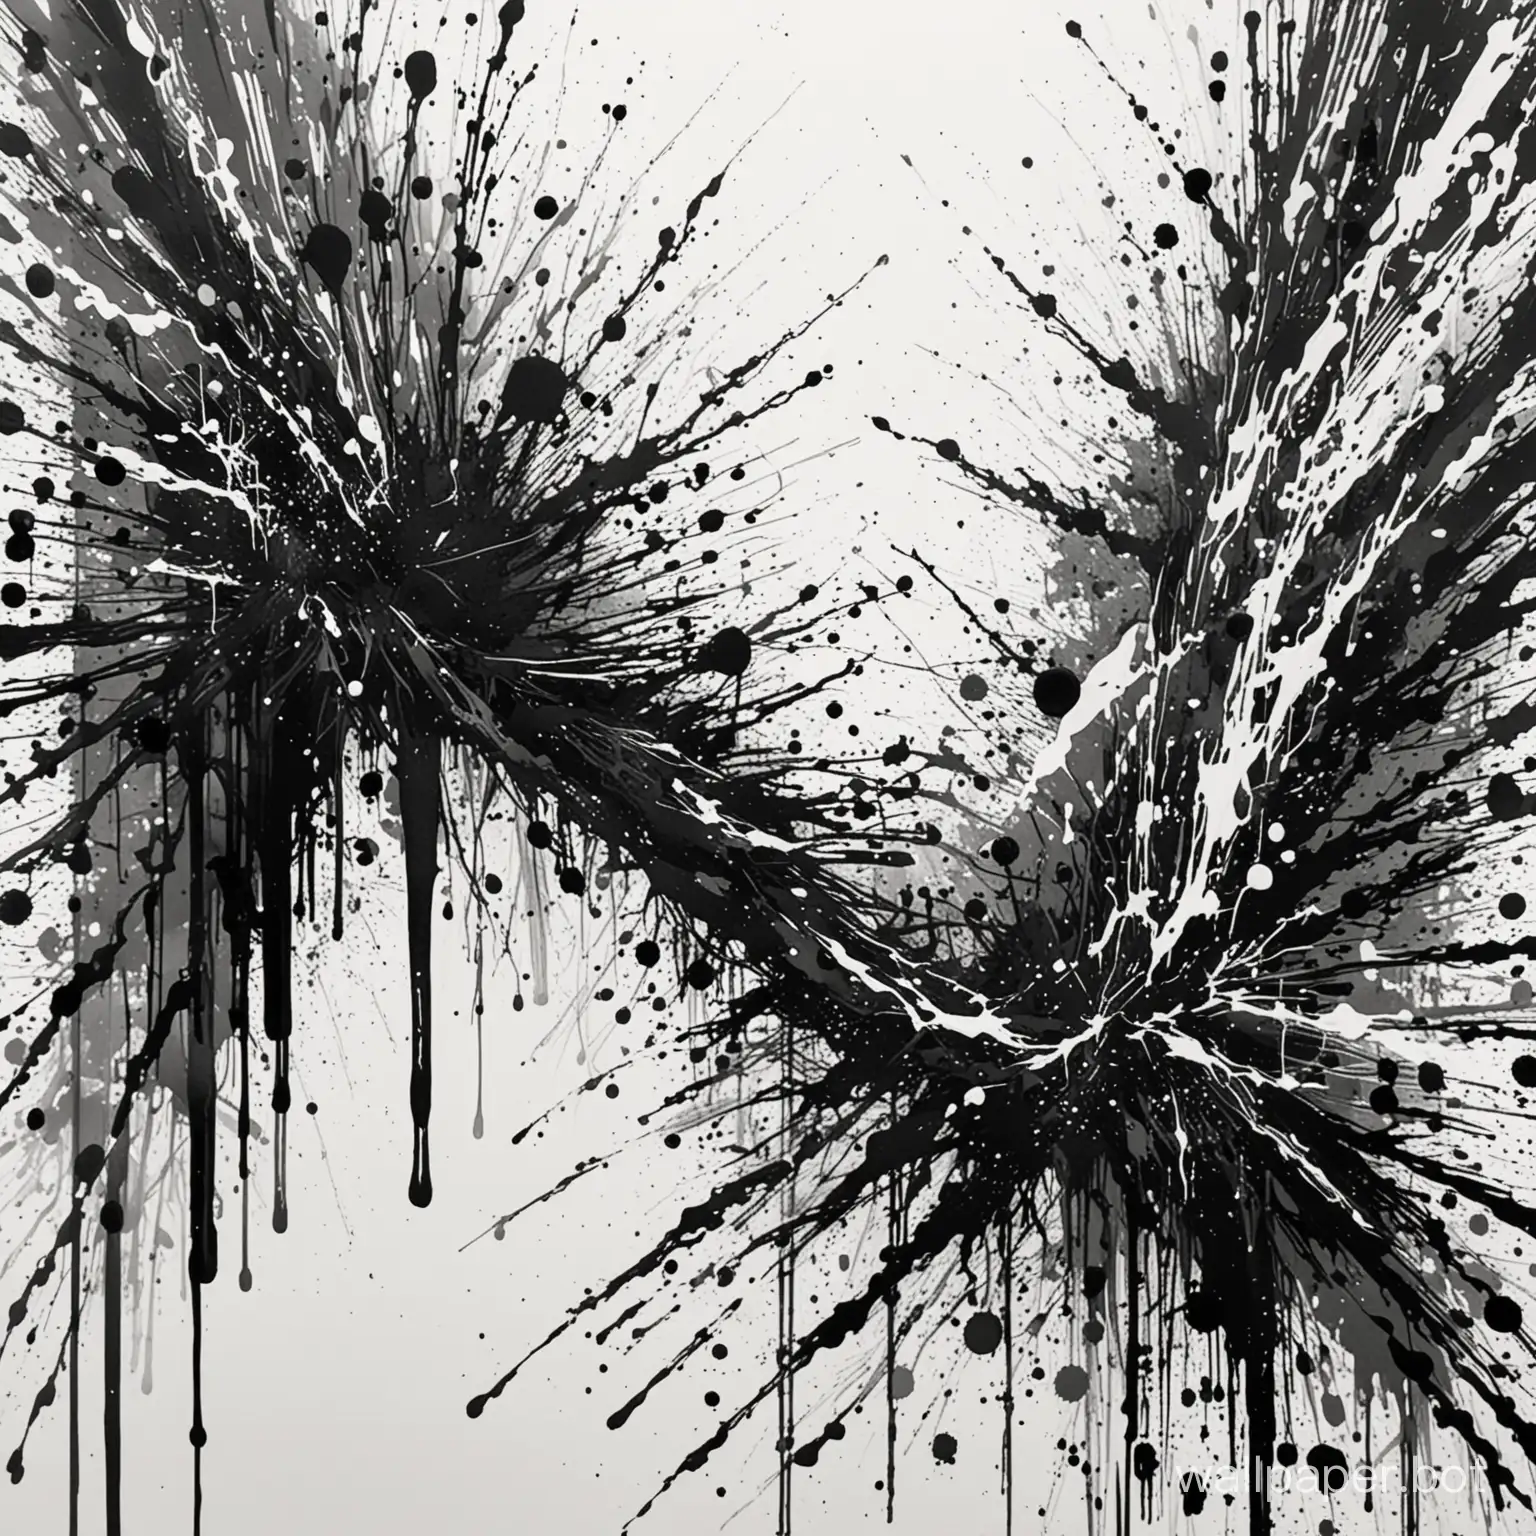 Chaotic-Brush-Lines-on-White-Background-Dark-Street-Art-Pattern-in-Blackwork-Ink-Splash